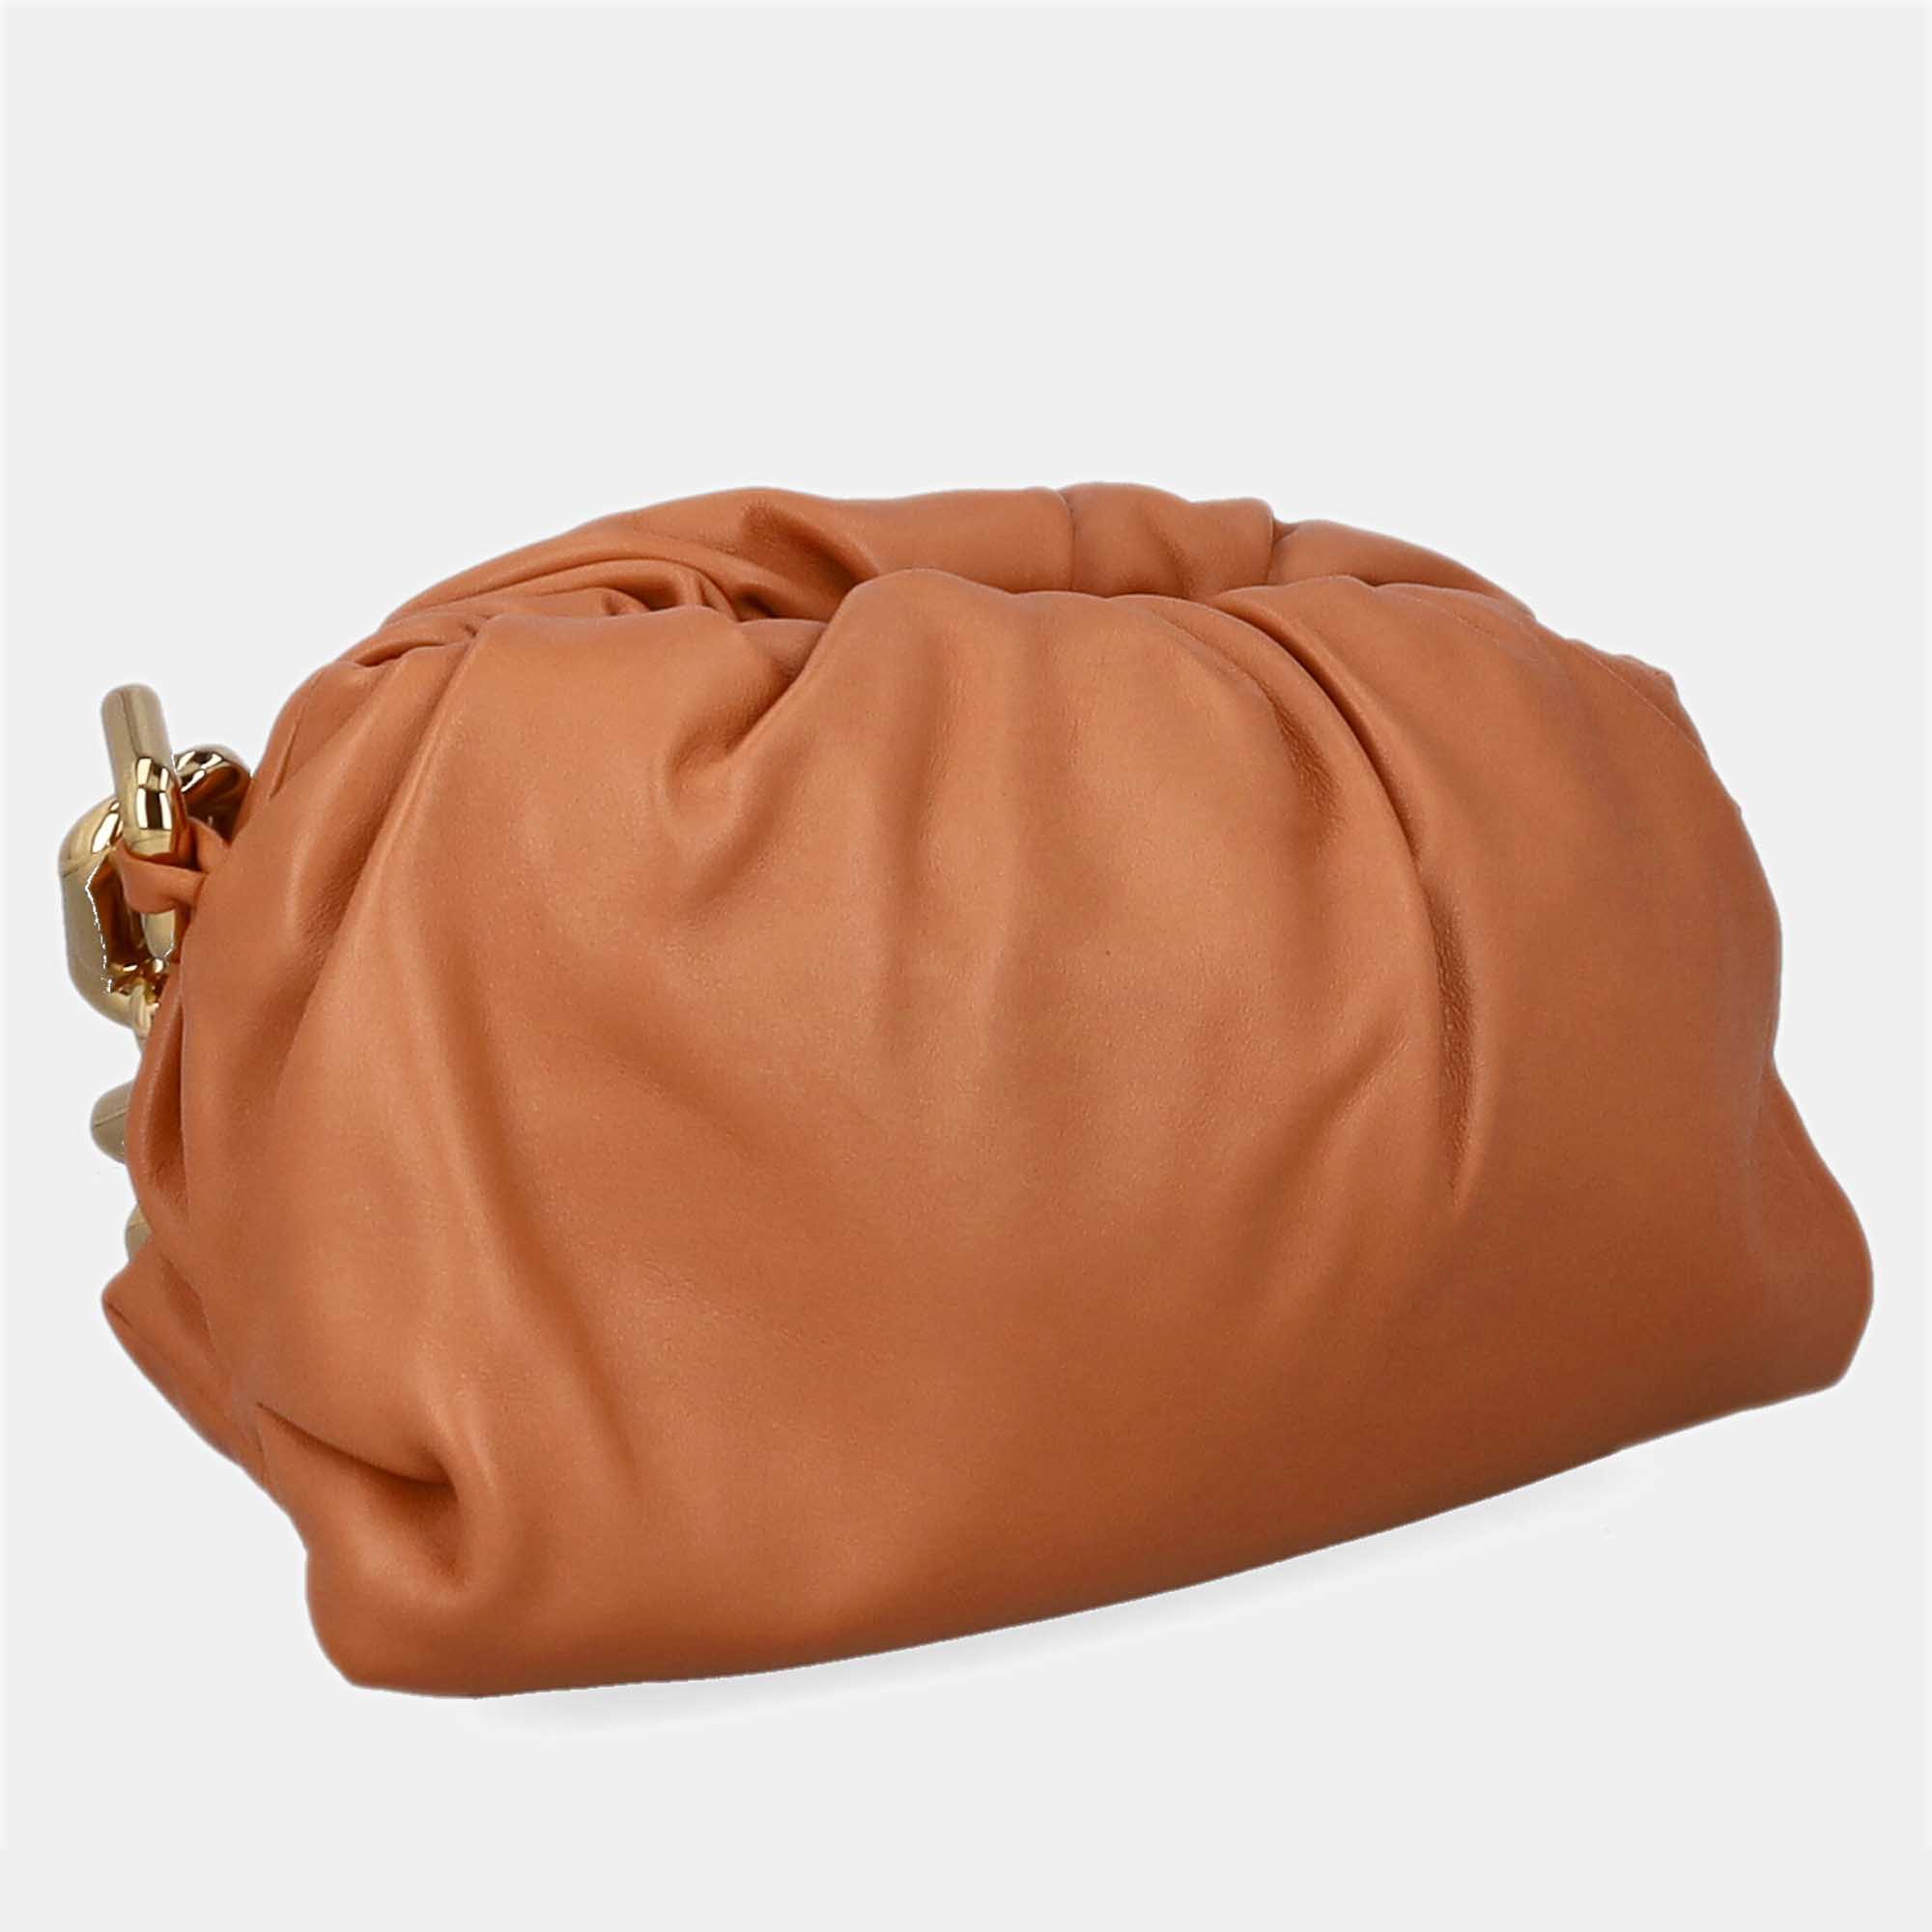 Bottega Veneta Shoulder Pouch -  Women's Leather Shoulder Bag - Orange - One Size